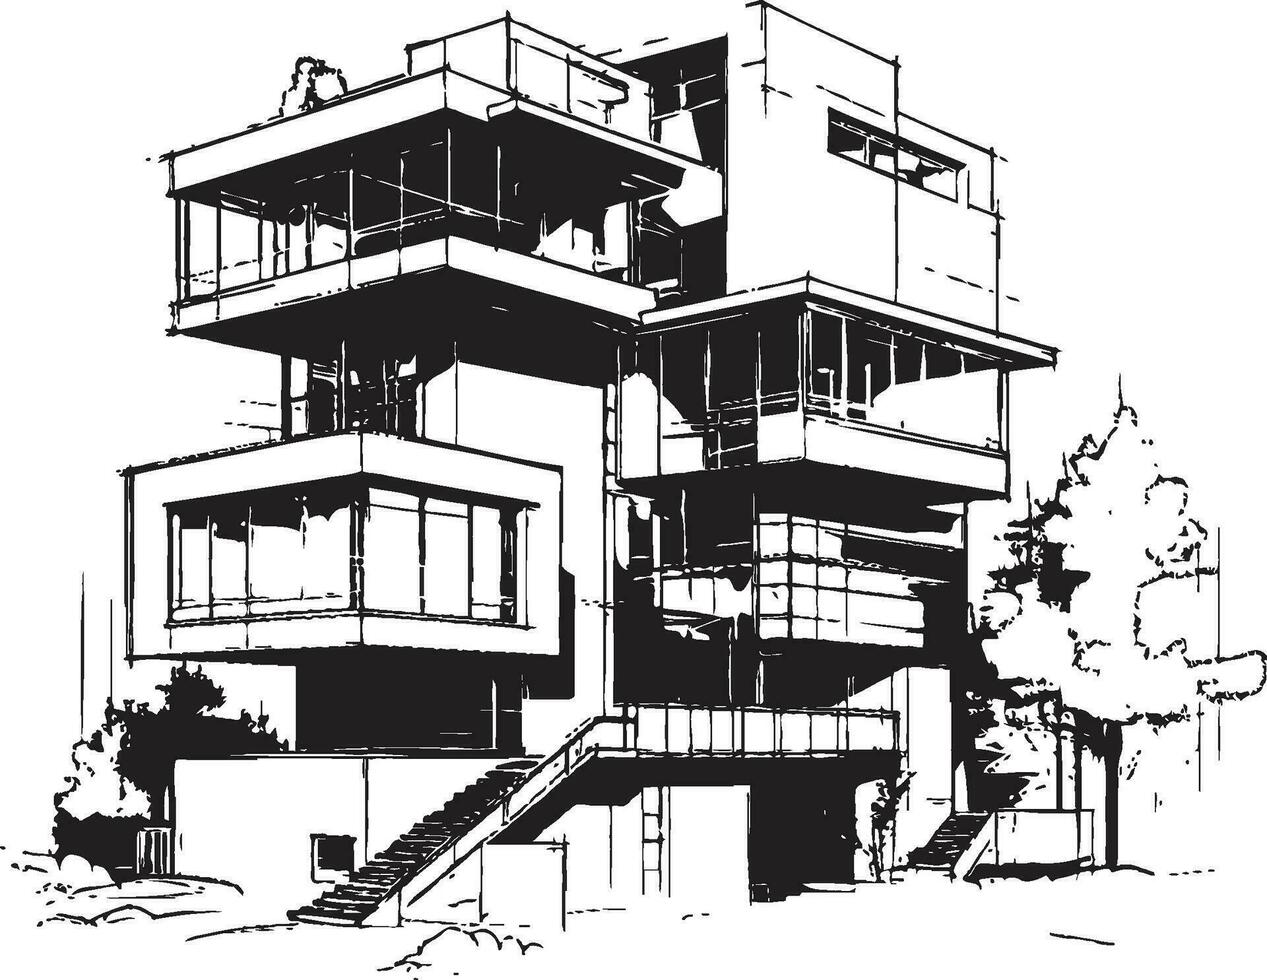 tri urban uppstigning ikoniska symbolism i urban bostads- design trippel- elevation metropol vektor emblem av urban prakt